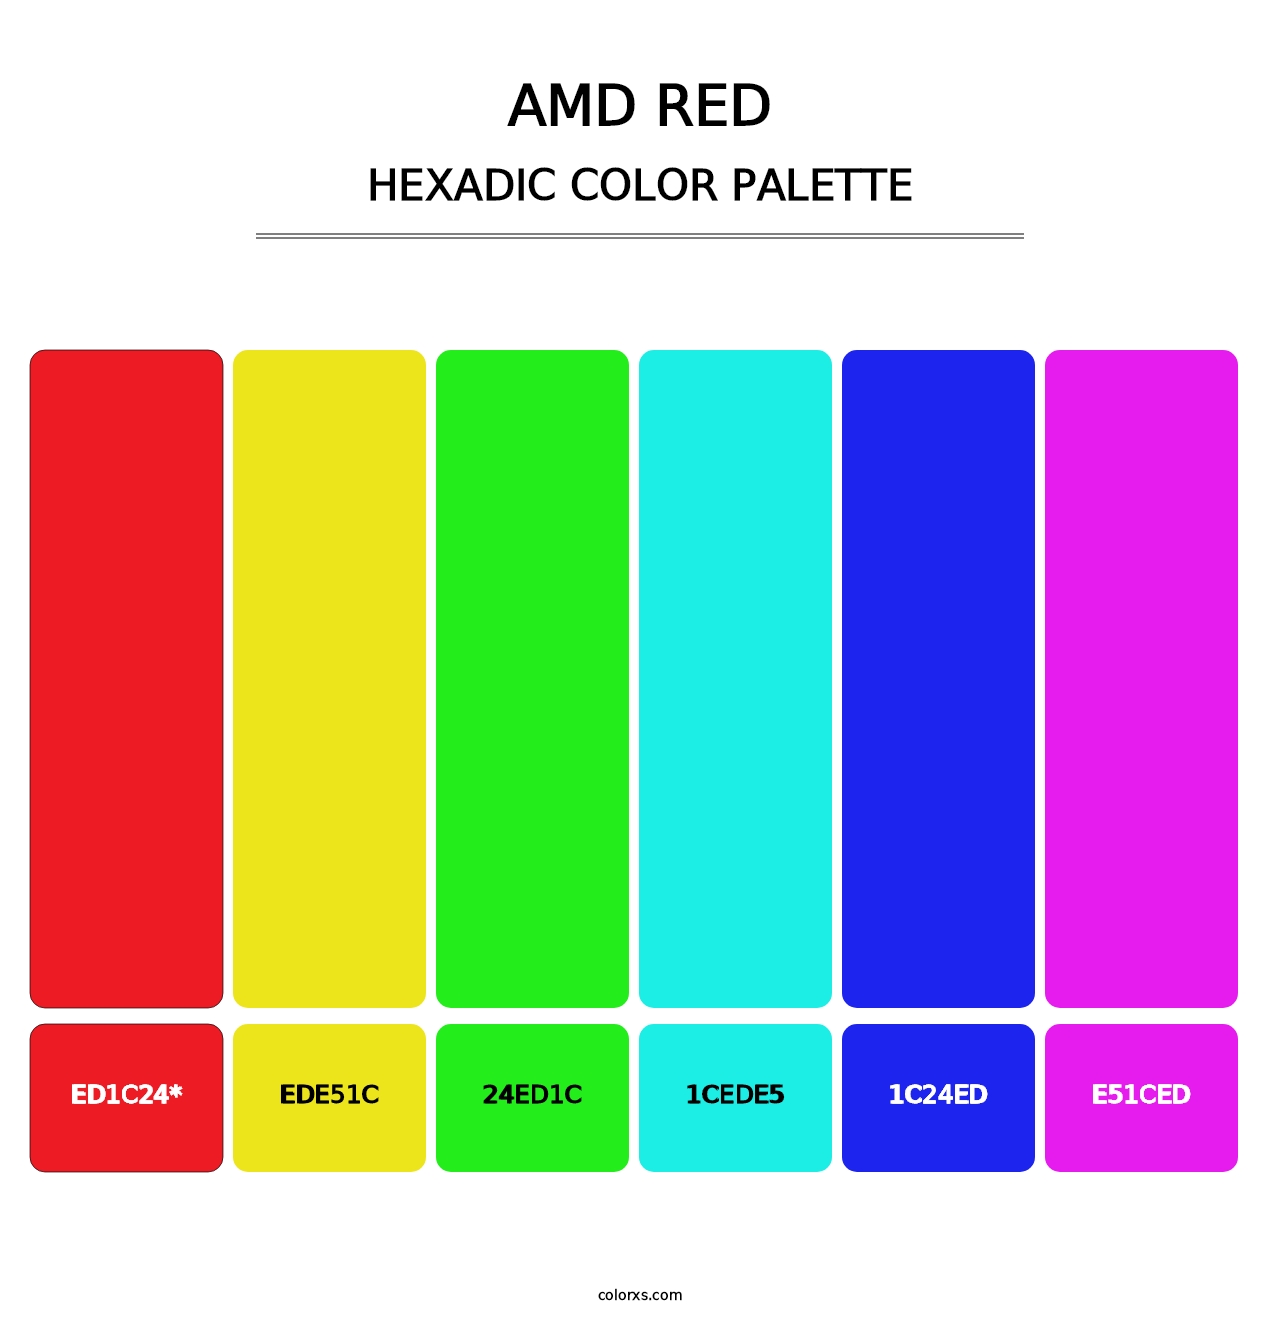 AMD Red - Hexadic Color Palette